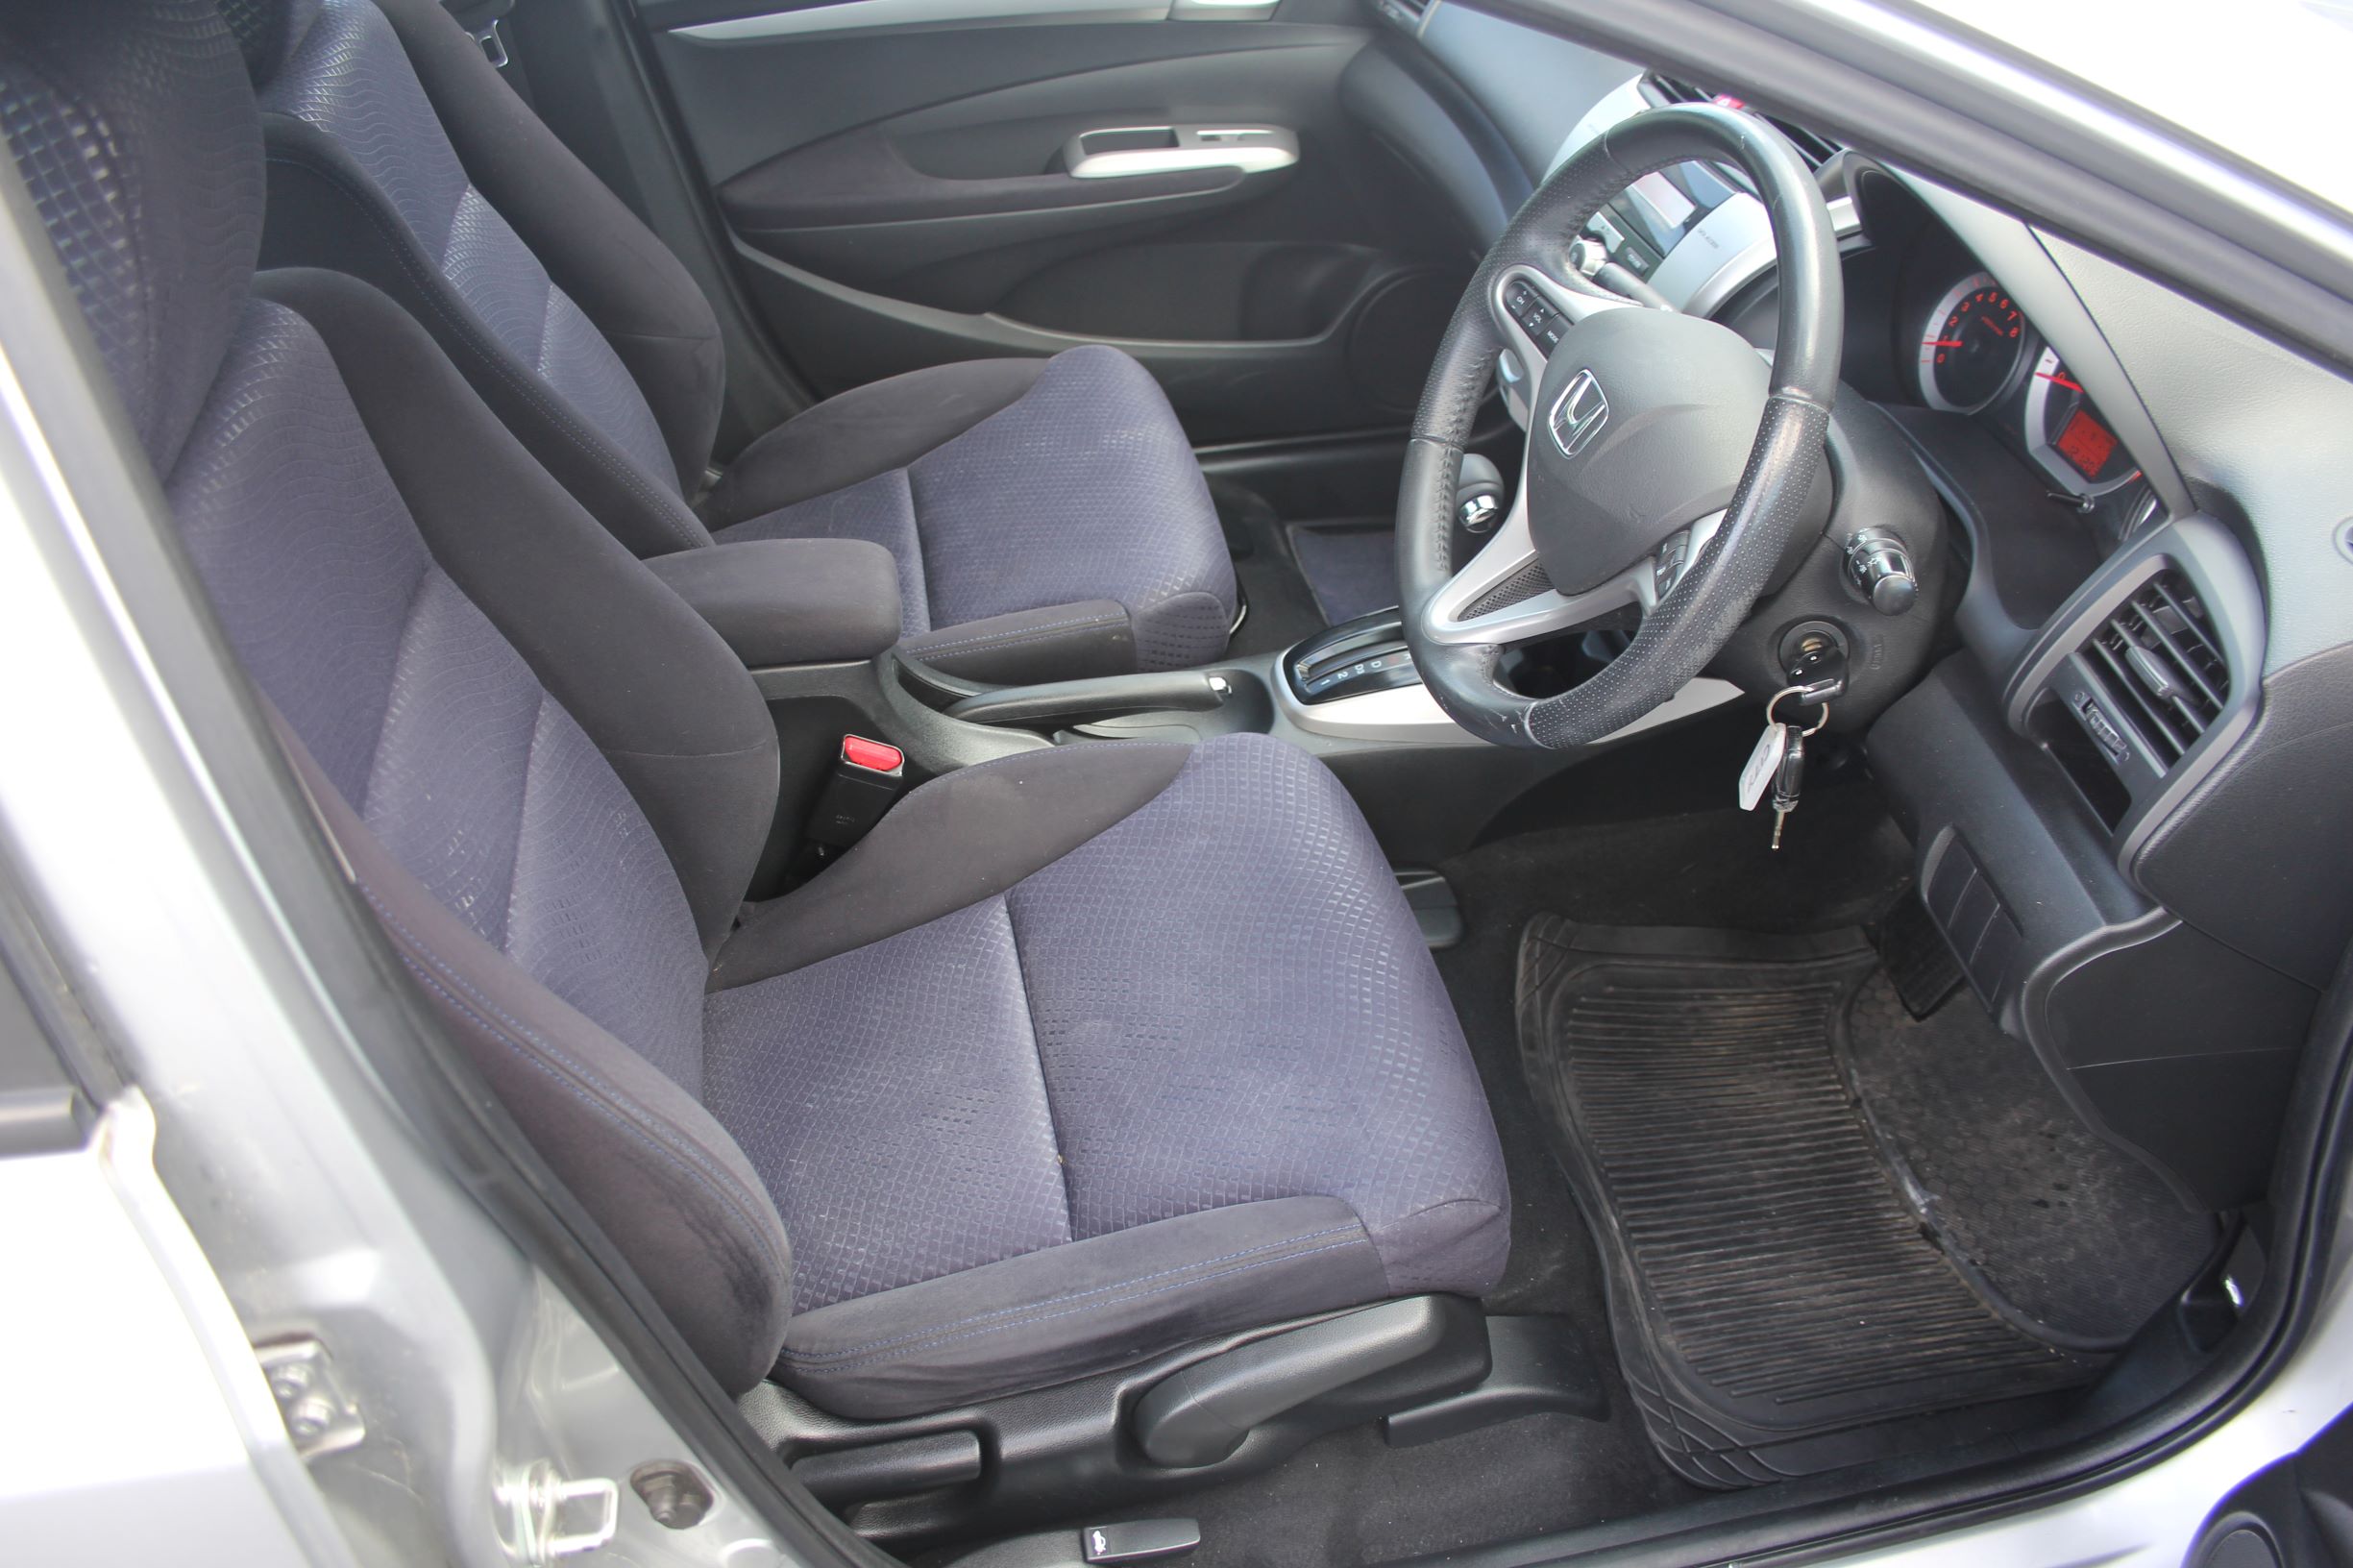 Honda City sedan 2011 for sale in Auckland